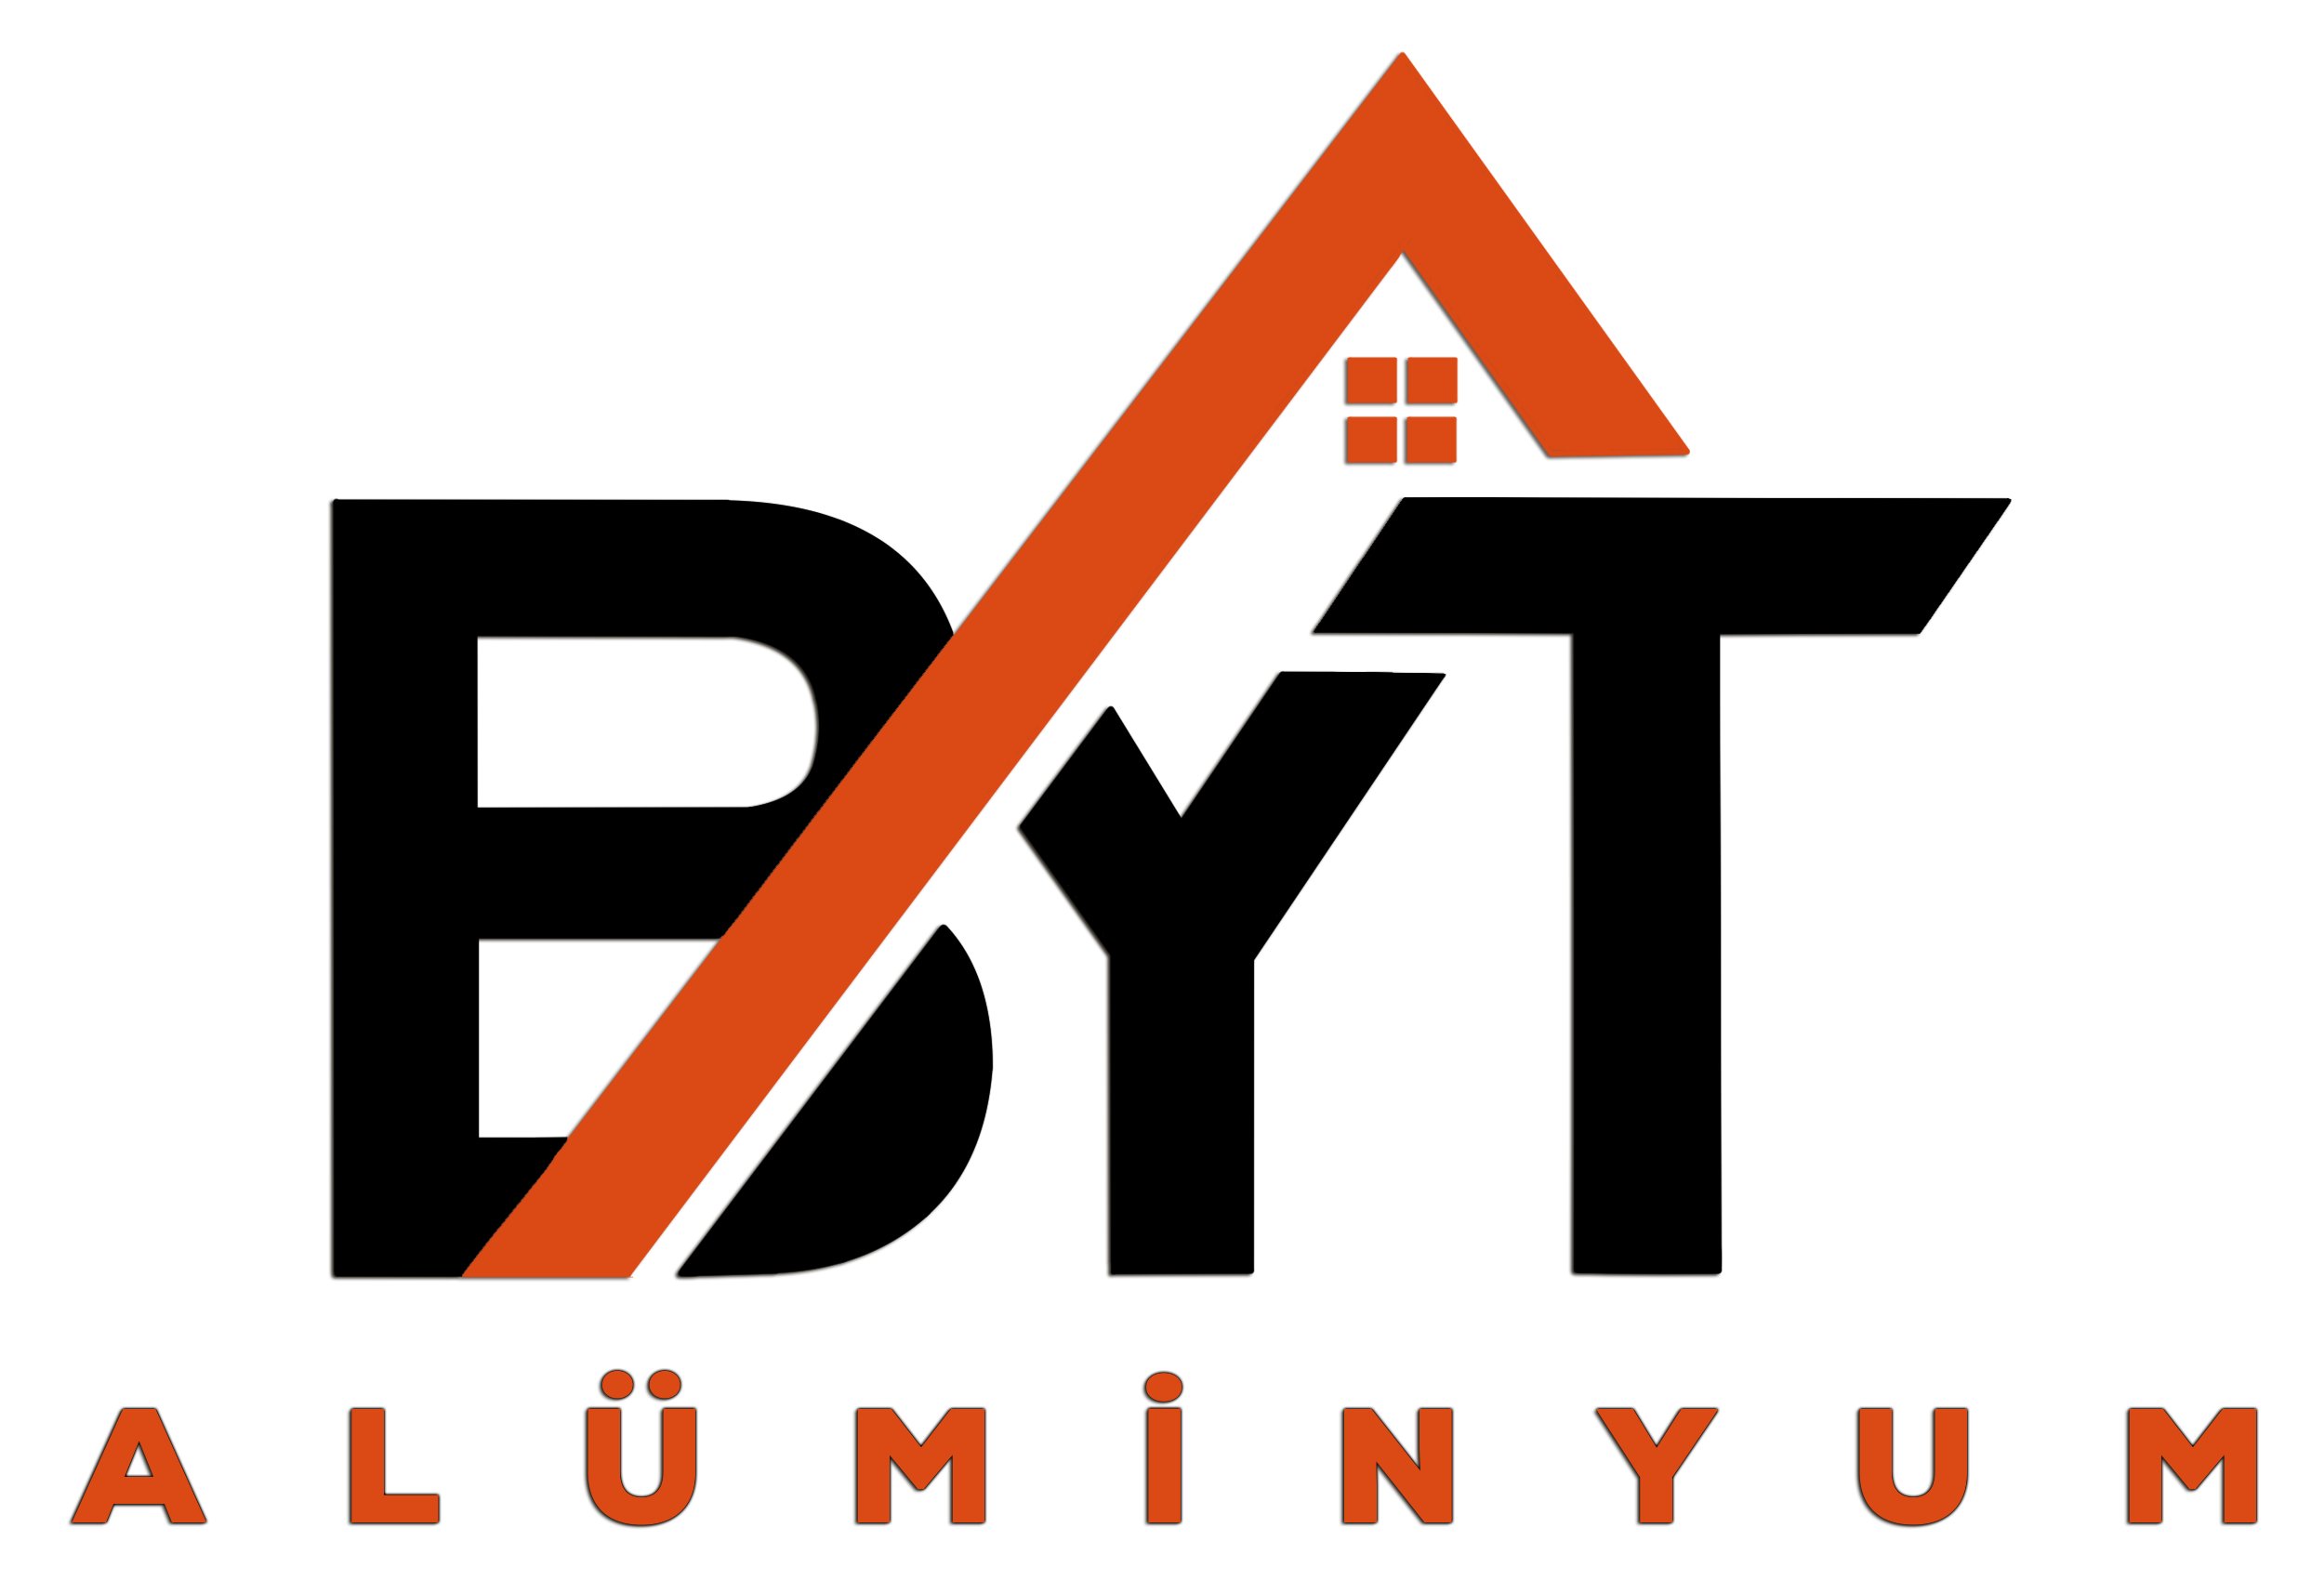 Byt Aluminyum